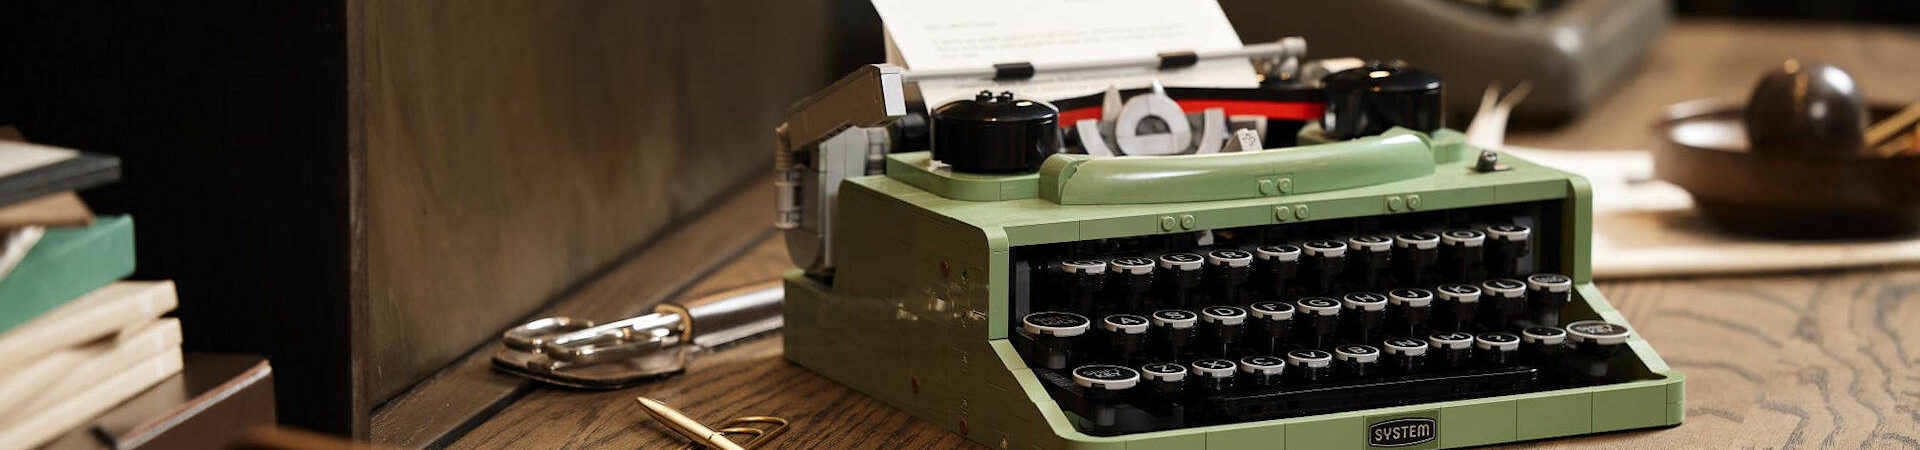 lego-ideas-typewriter-166728